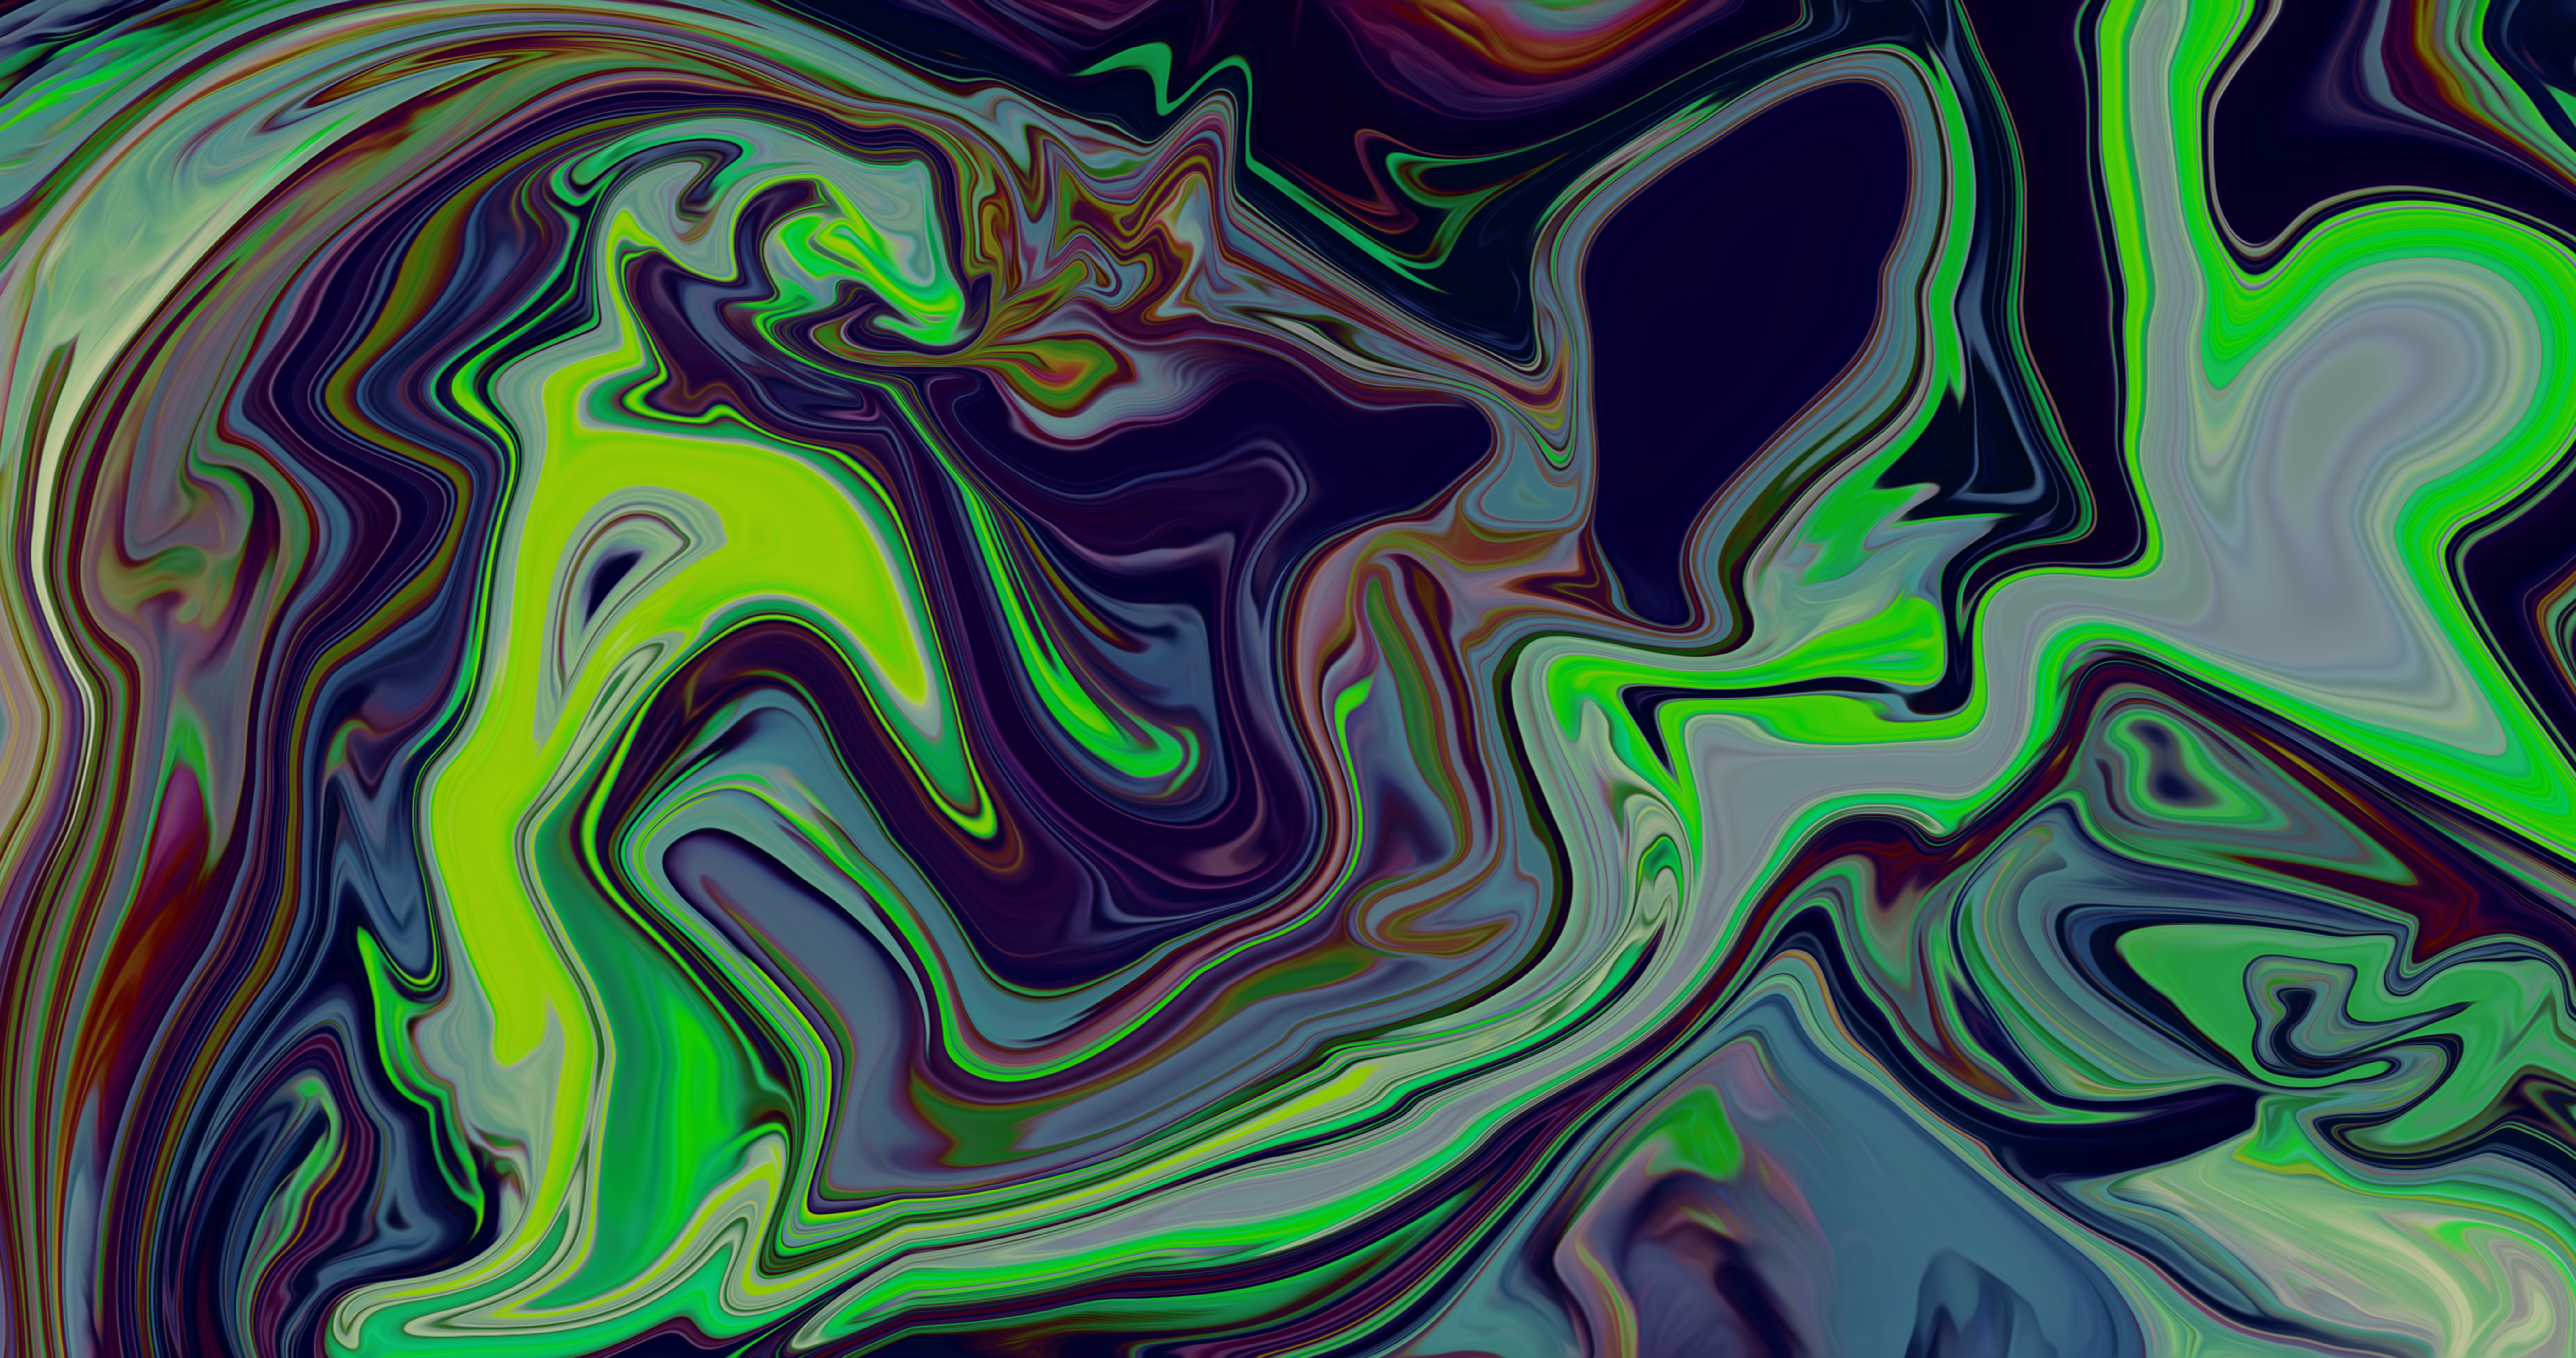 General 8192x4320 abstract shapes fluid liquid artwork digital art 8 K colorful green